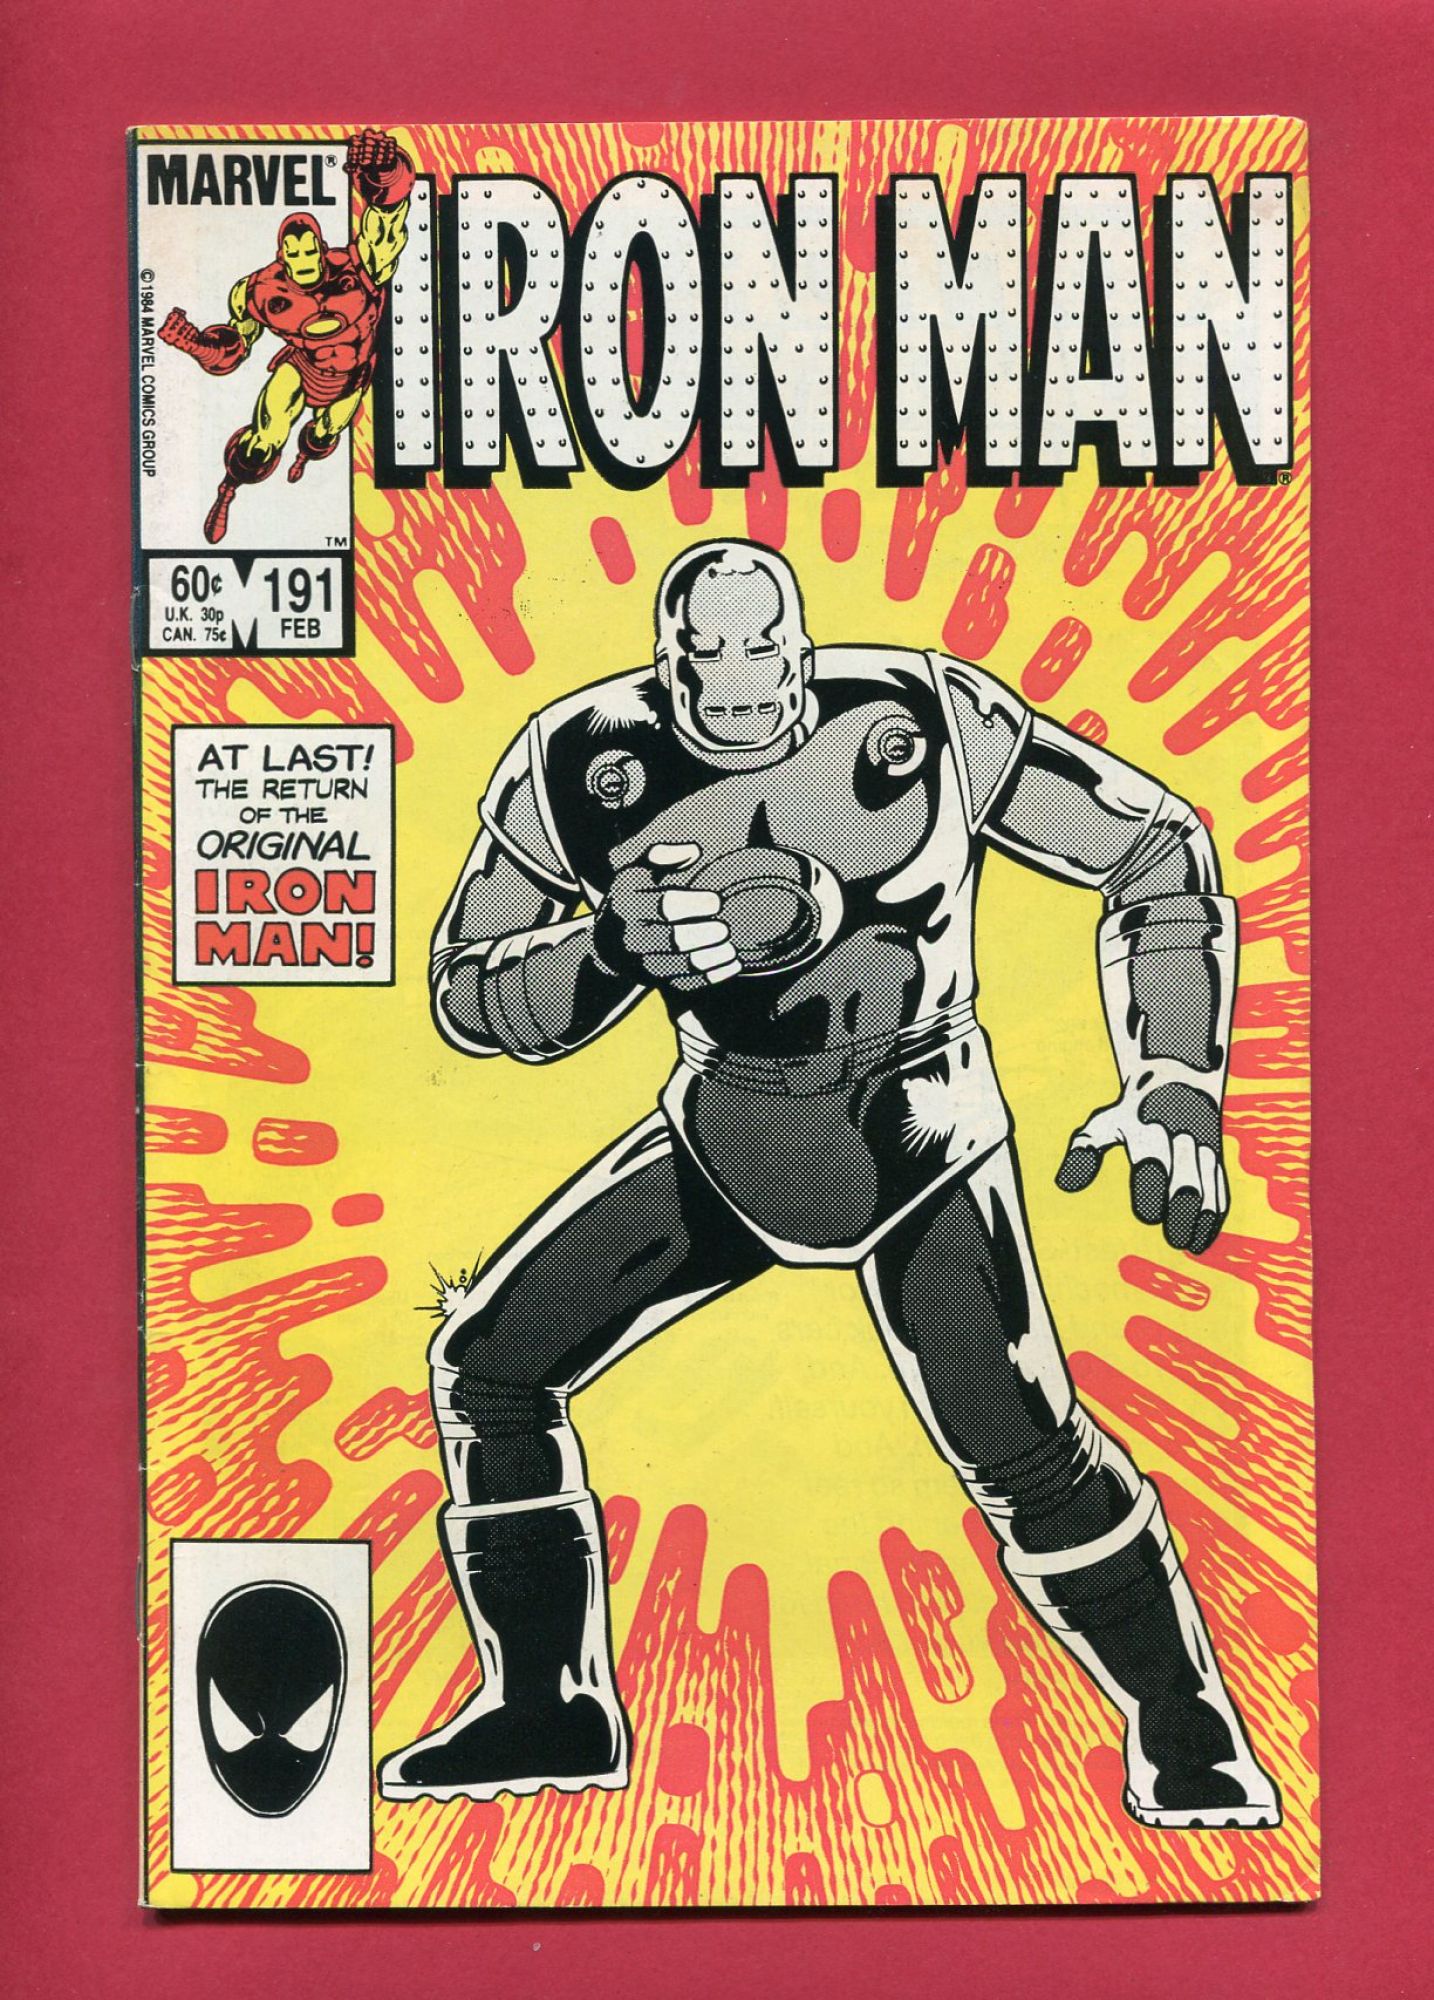 Iron Man #191, Feb 1985, 8.5 VF+